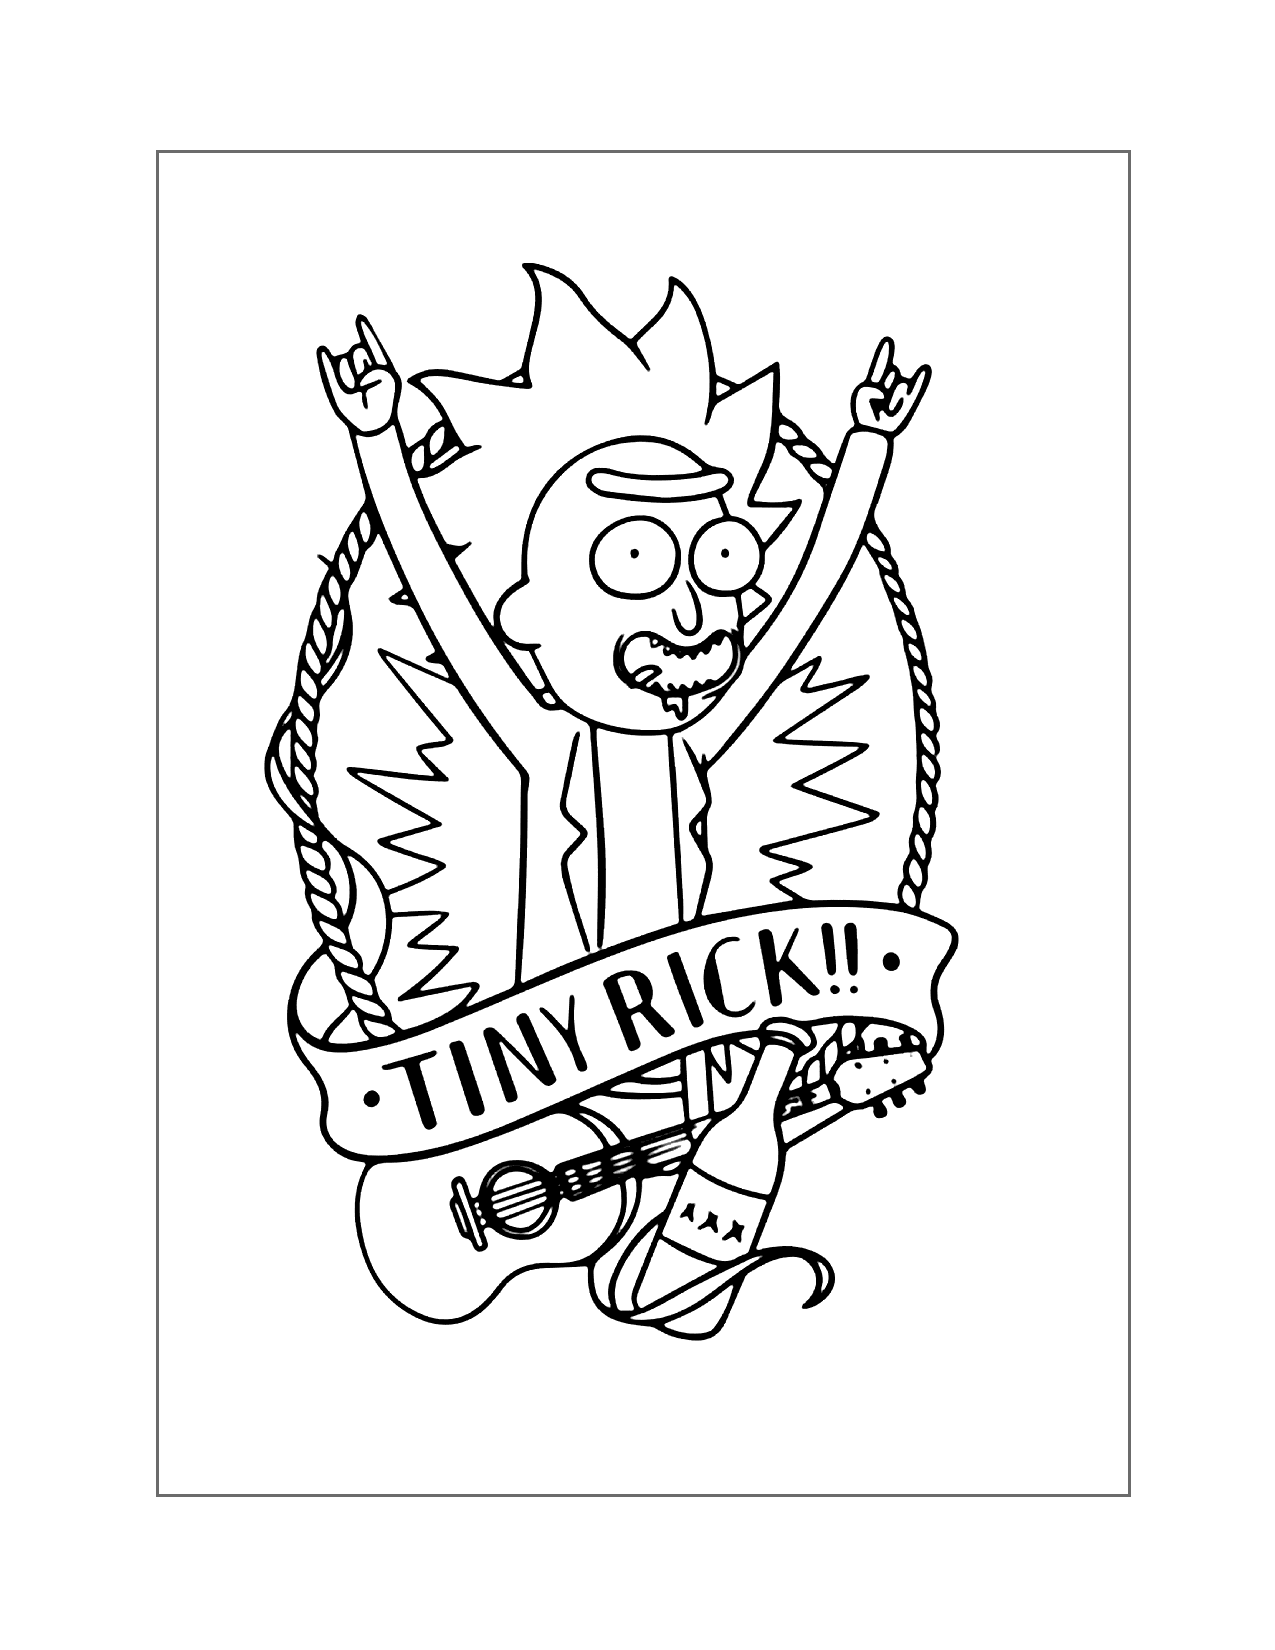 Tiny Rick Coloring Page